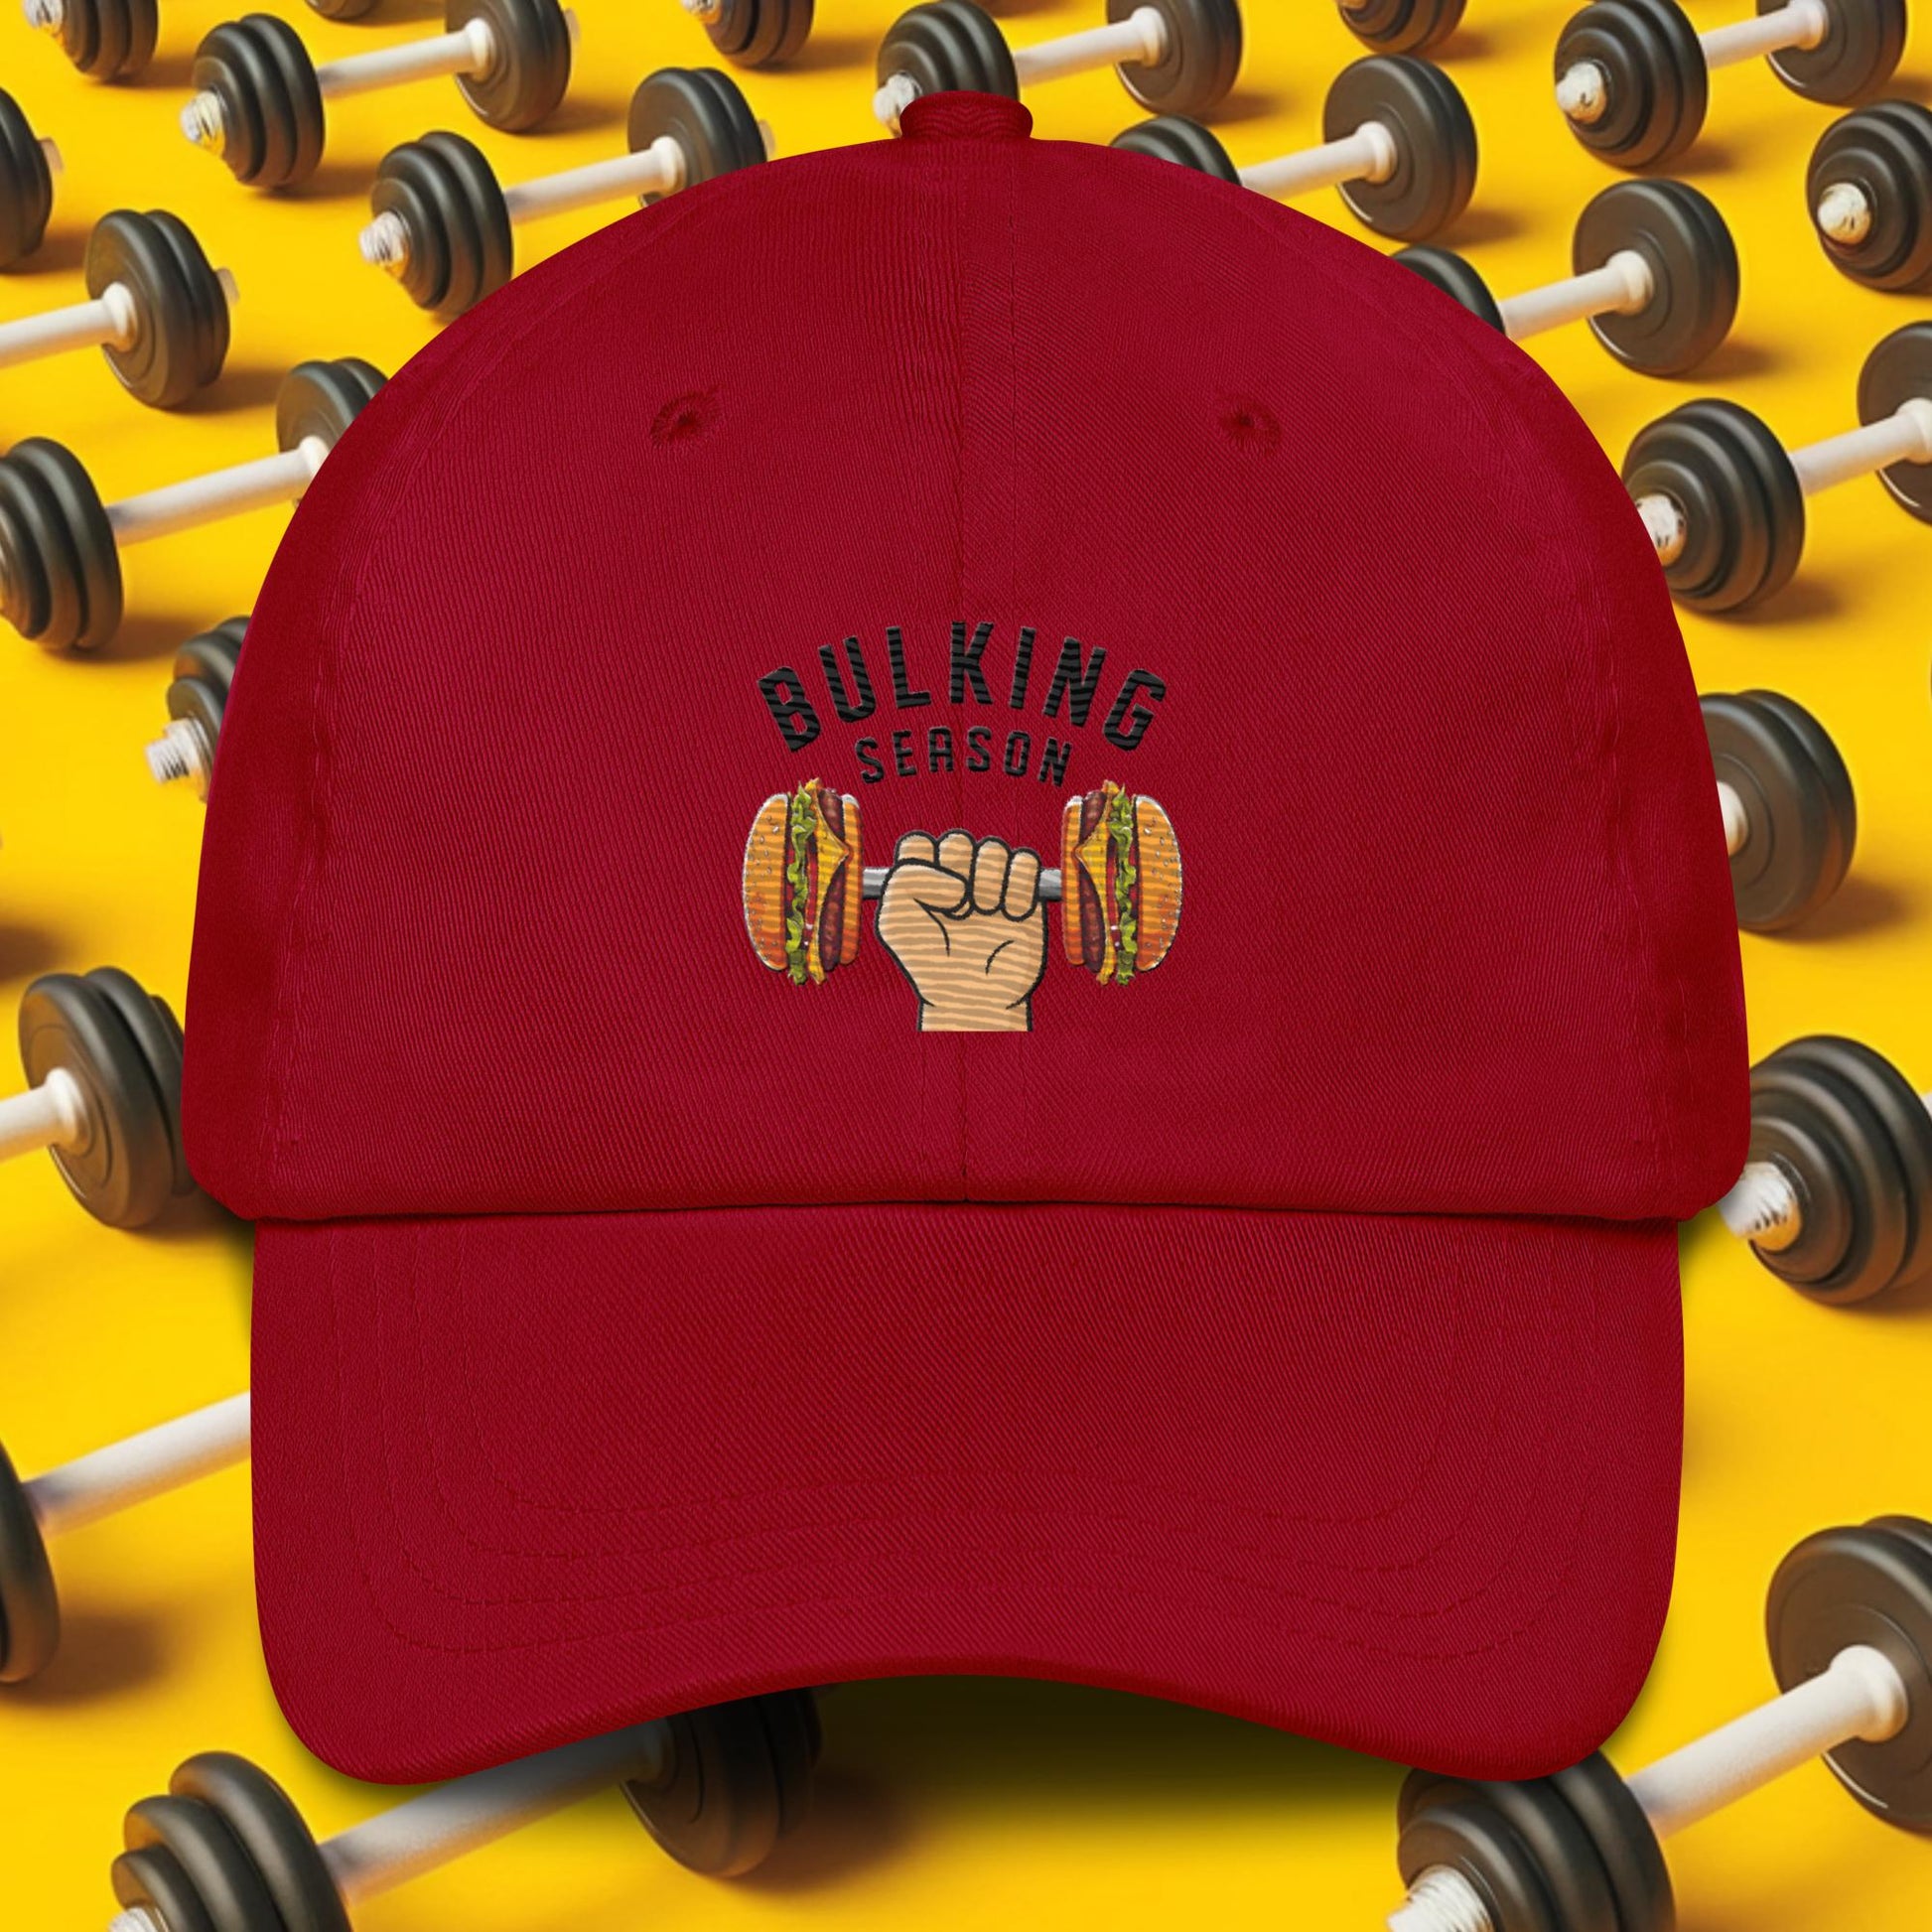 Bulking Season Funny Bulk Diet Gym Workout Fitness Dad hat Next Cult Brand